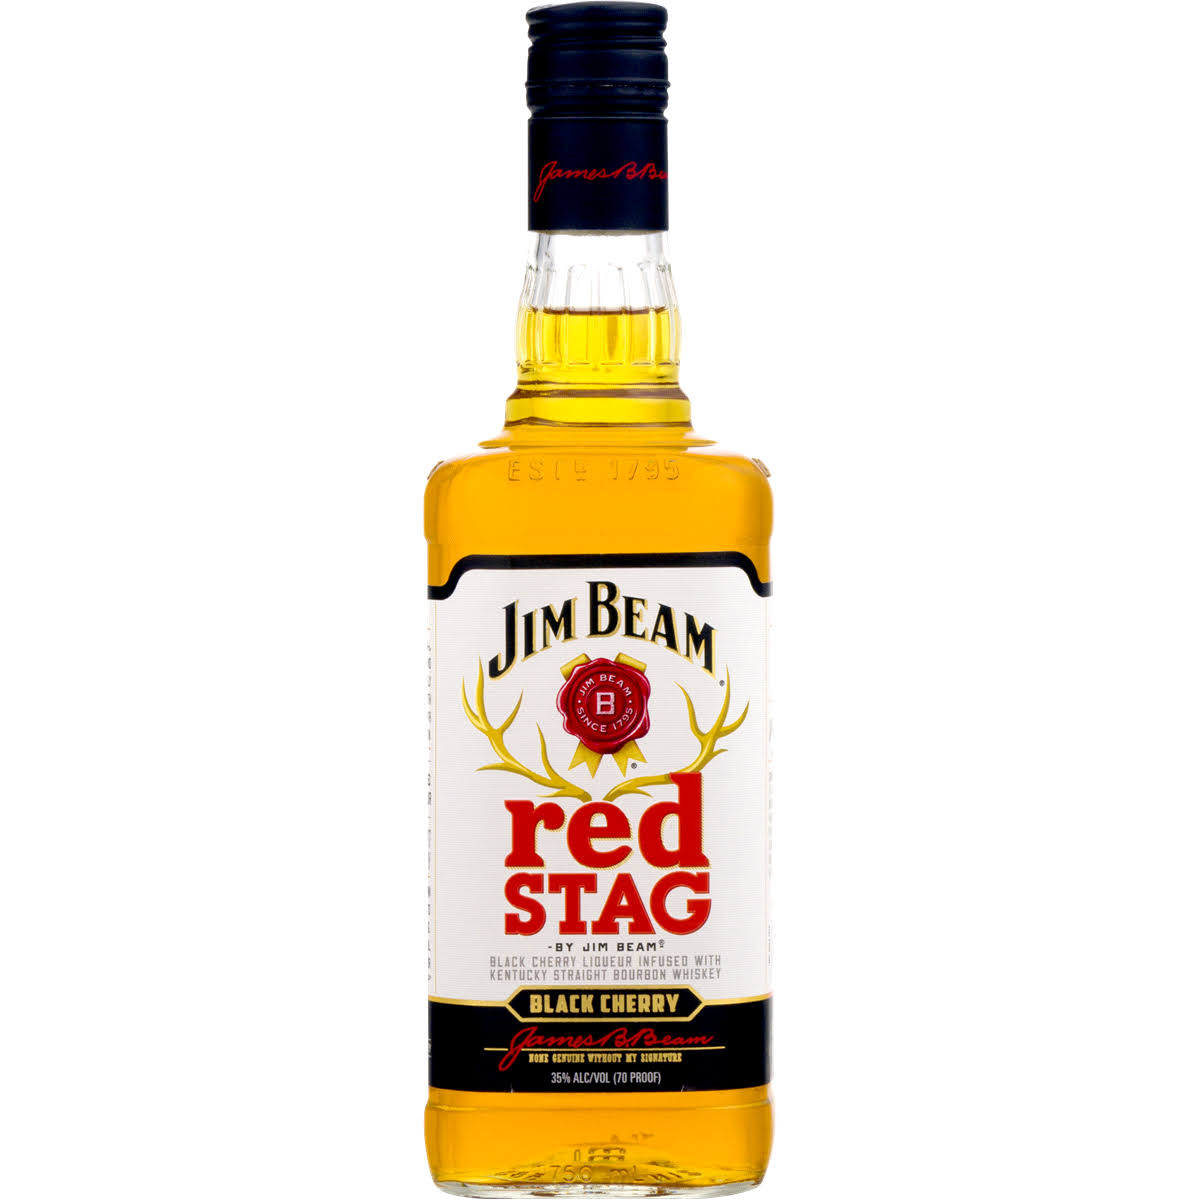 Jim Beam Bourbon Red Stag Black Cherry